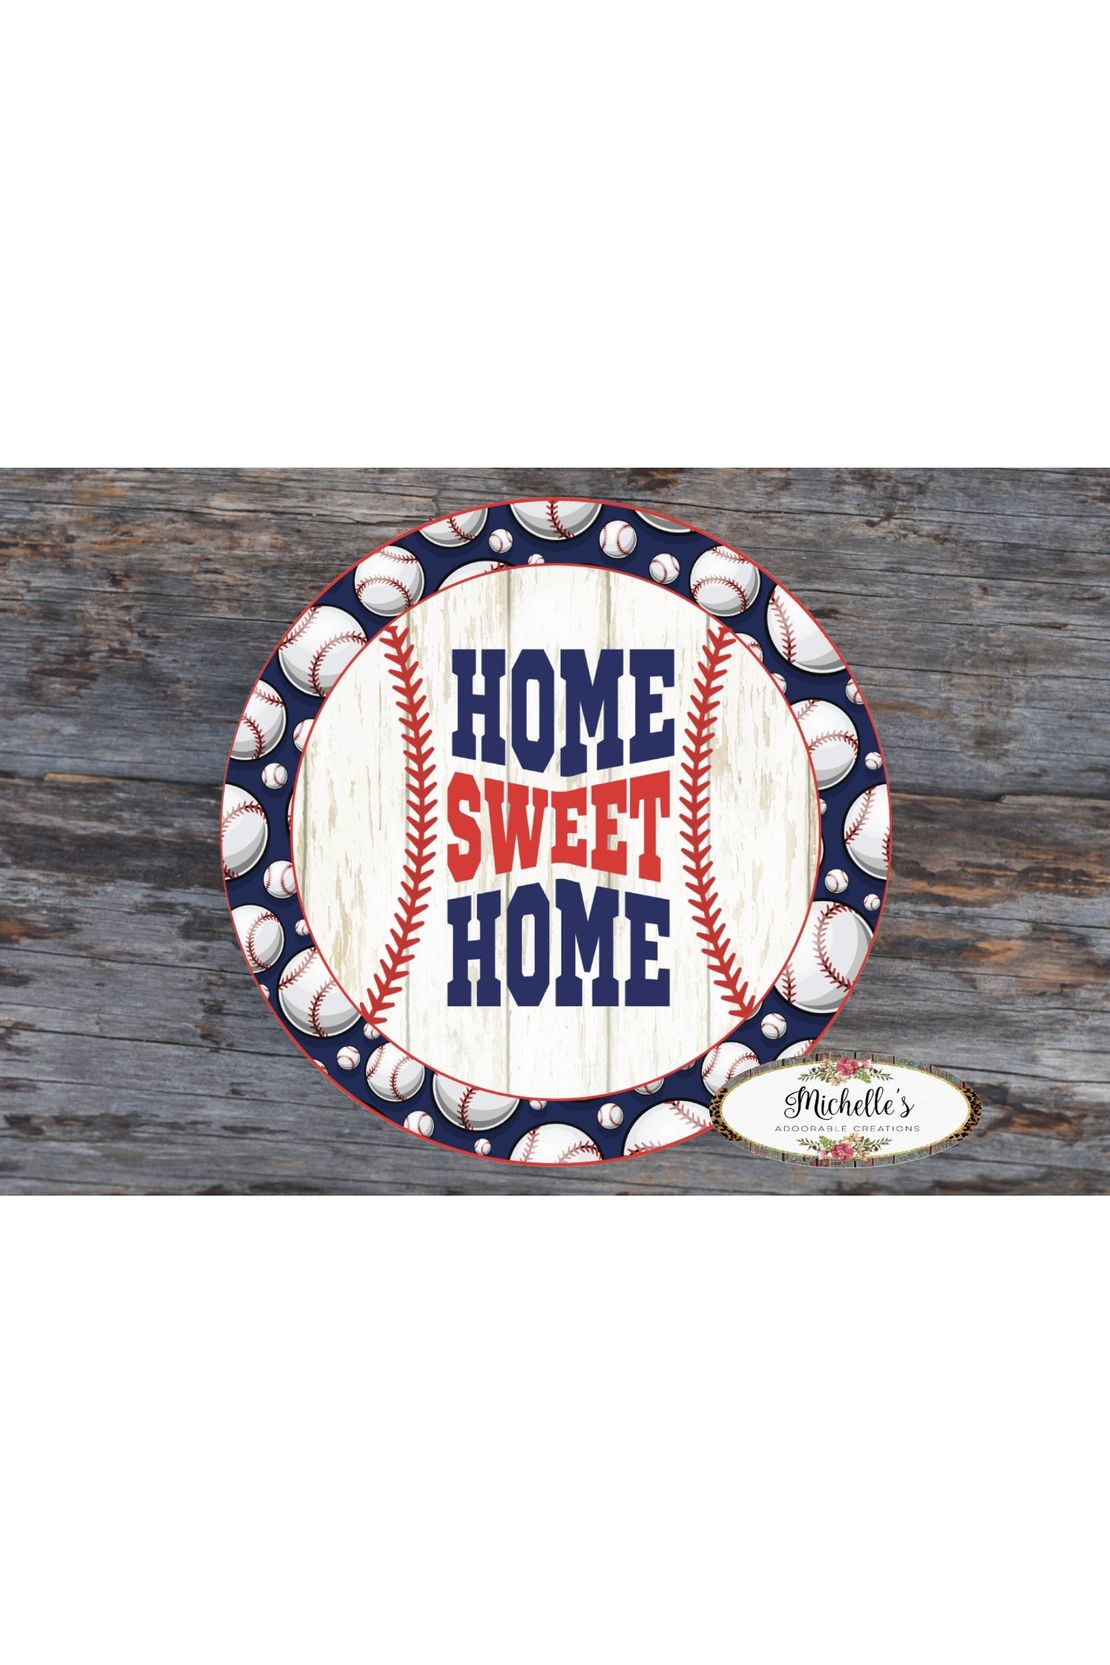 Shop For Baseball Home Sweet Home Sign - Wreath Enhancement